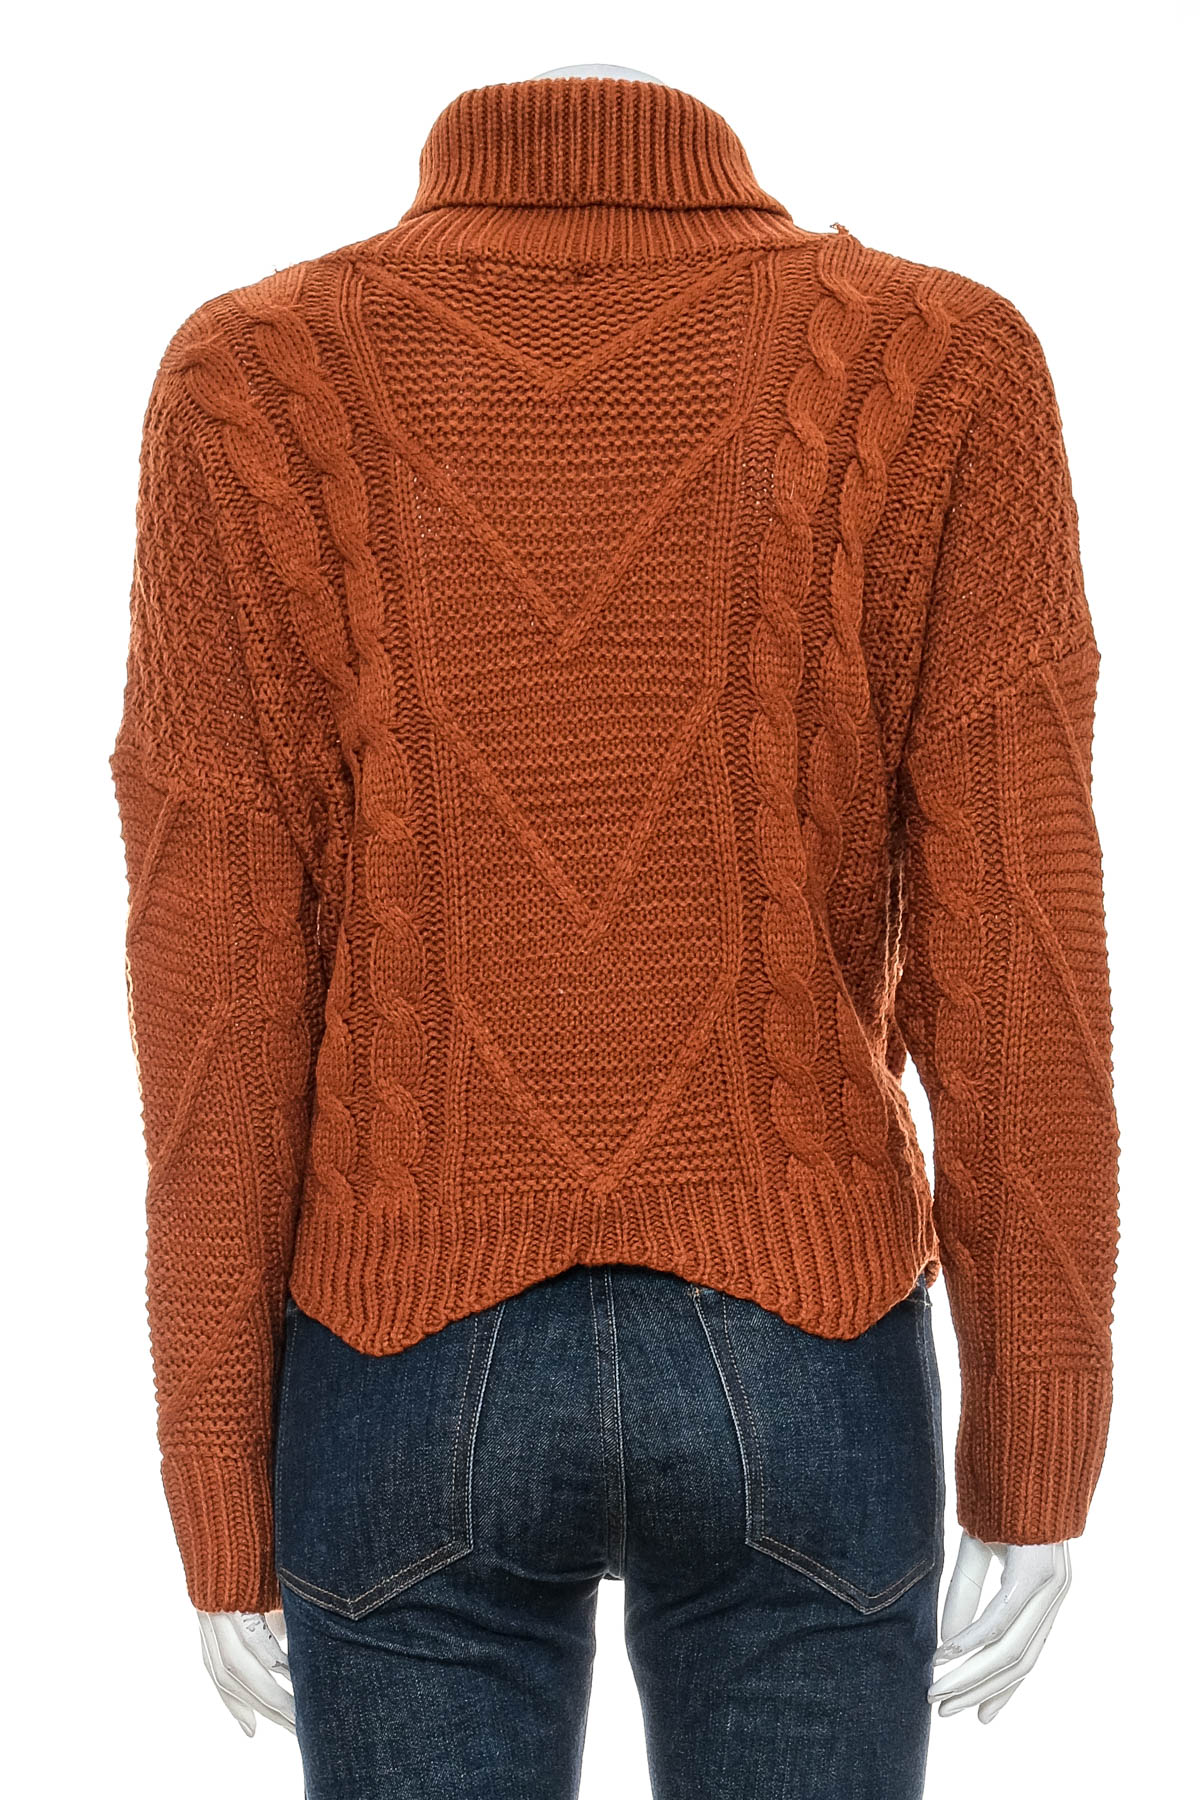 Women's sweater - Beyove - 1